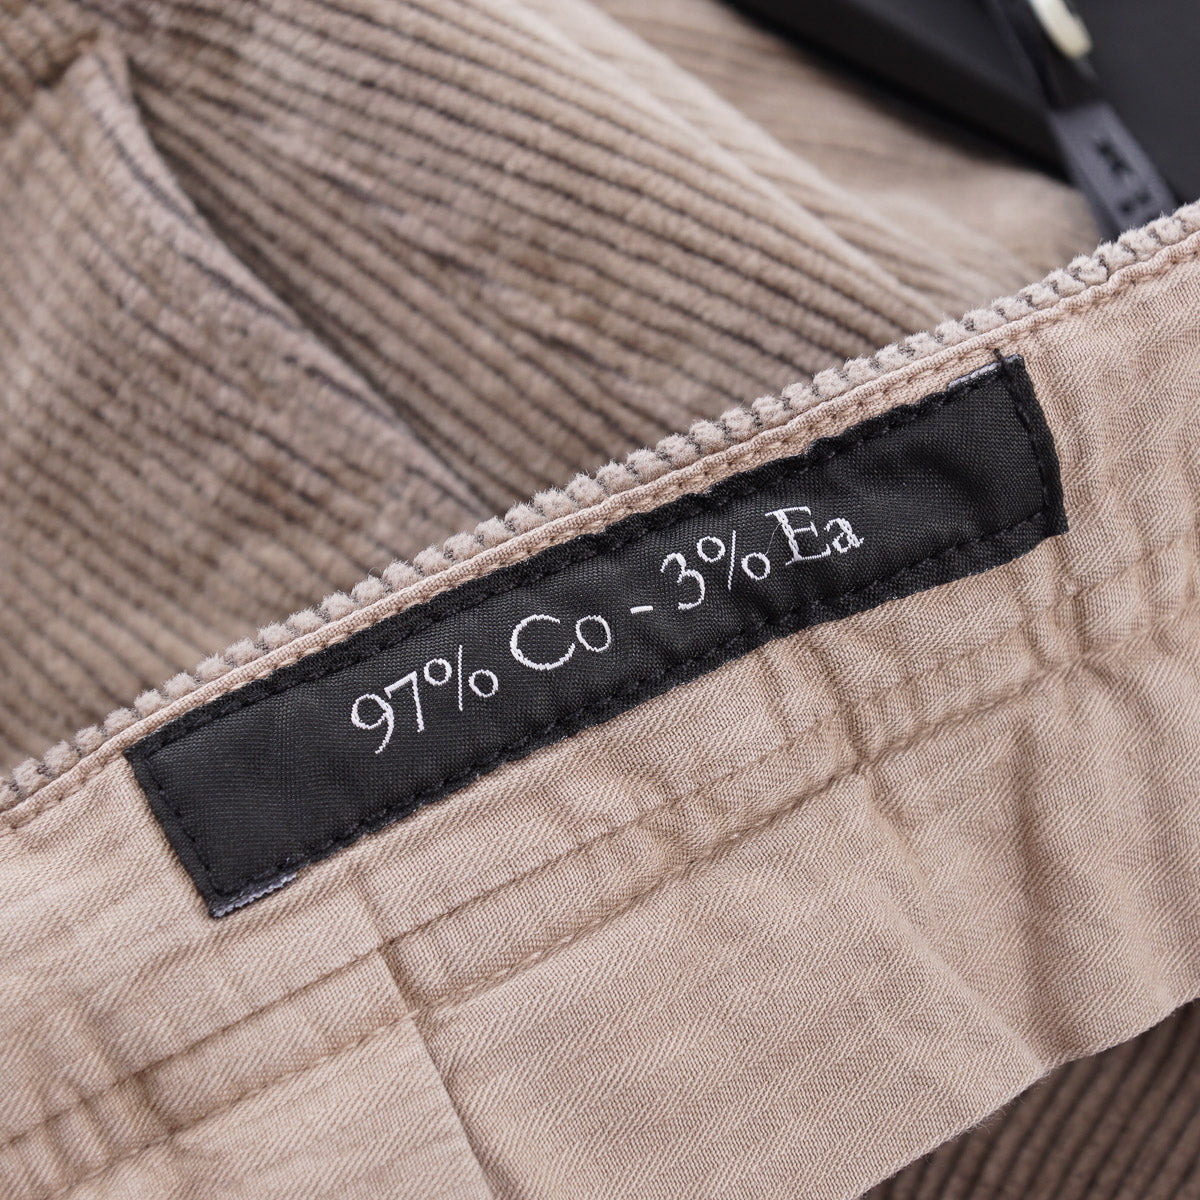 Kiton Corduroy Pants with Cargo Pockets - Top Shelf Apparel